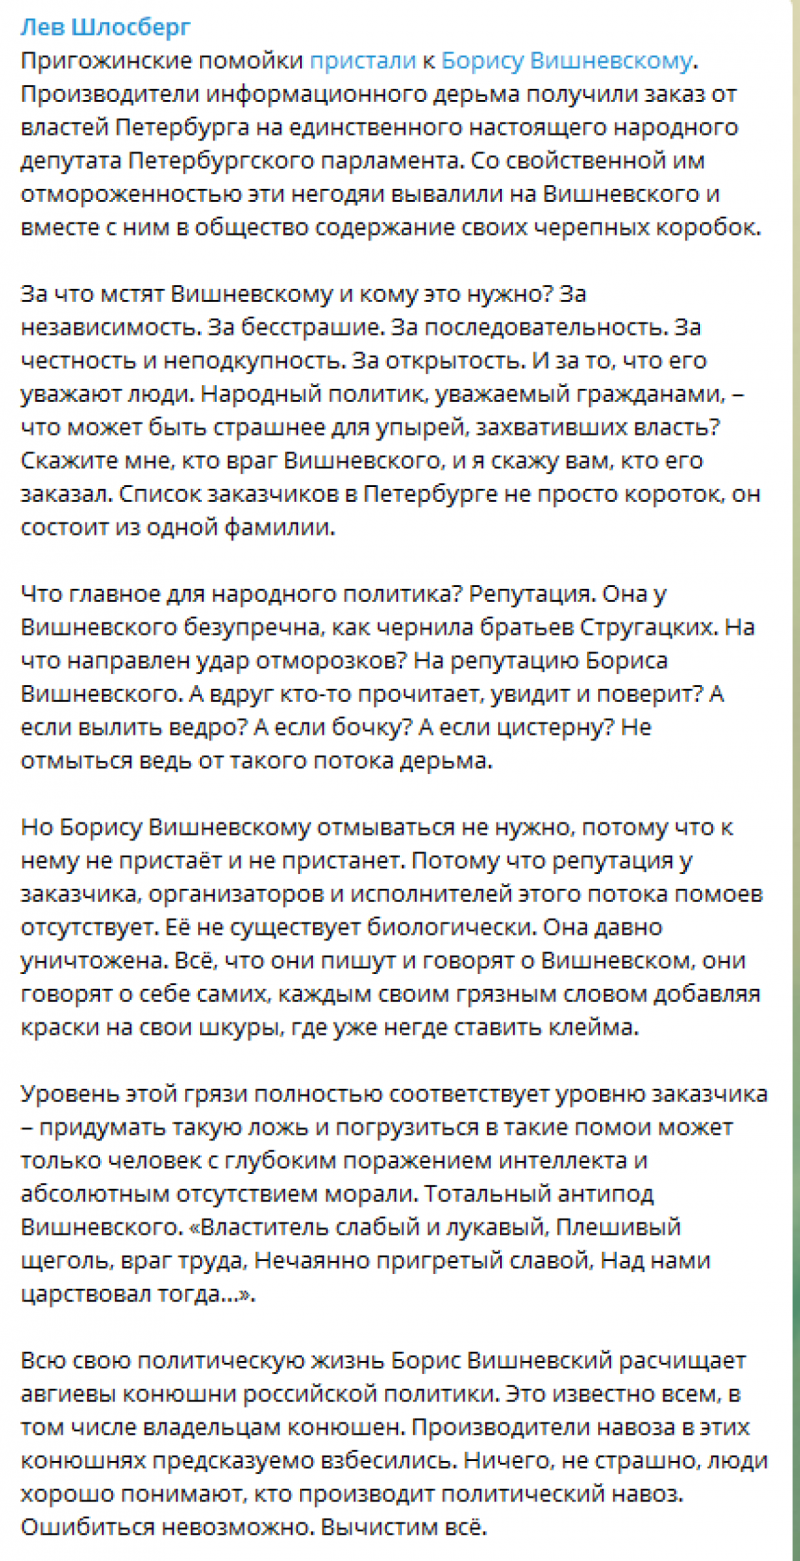 Защитники депутата Вишневского год назад осуждали харасмент Слуцкого